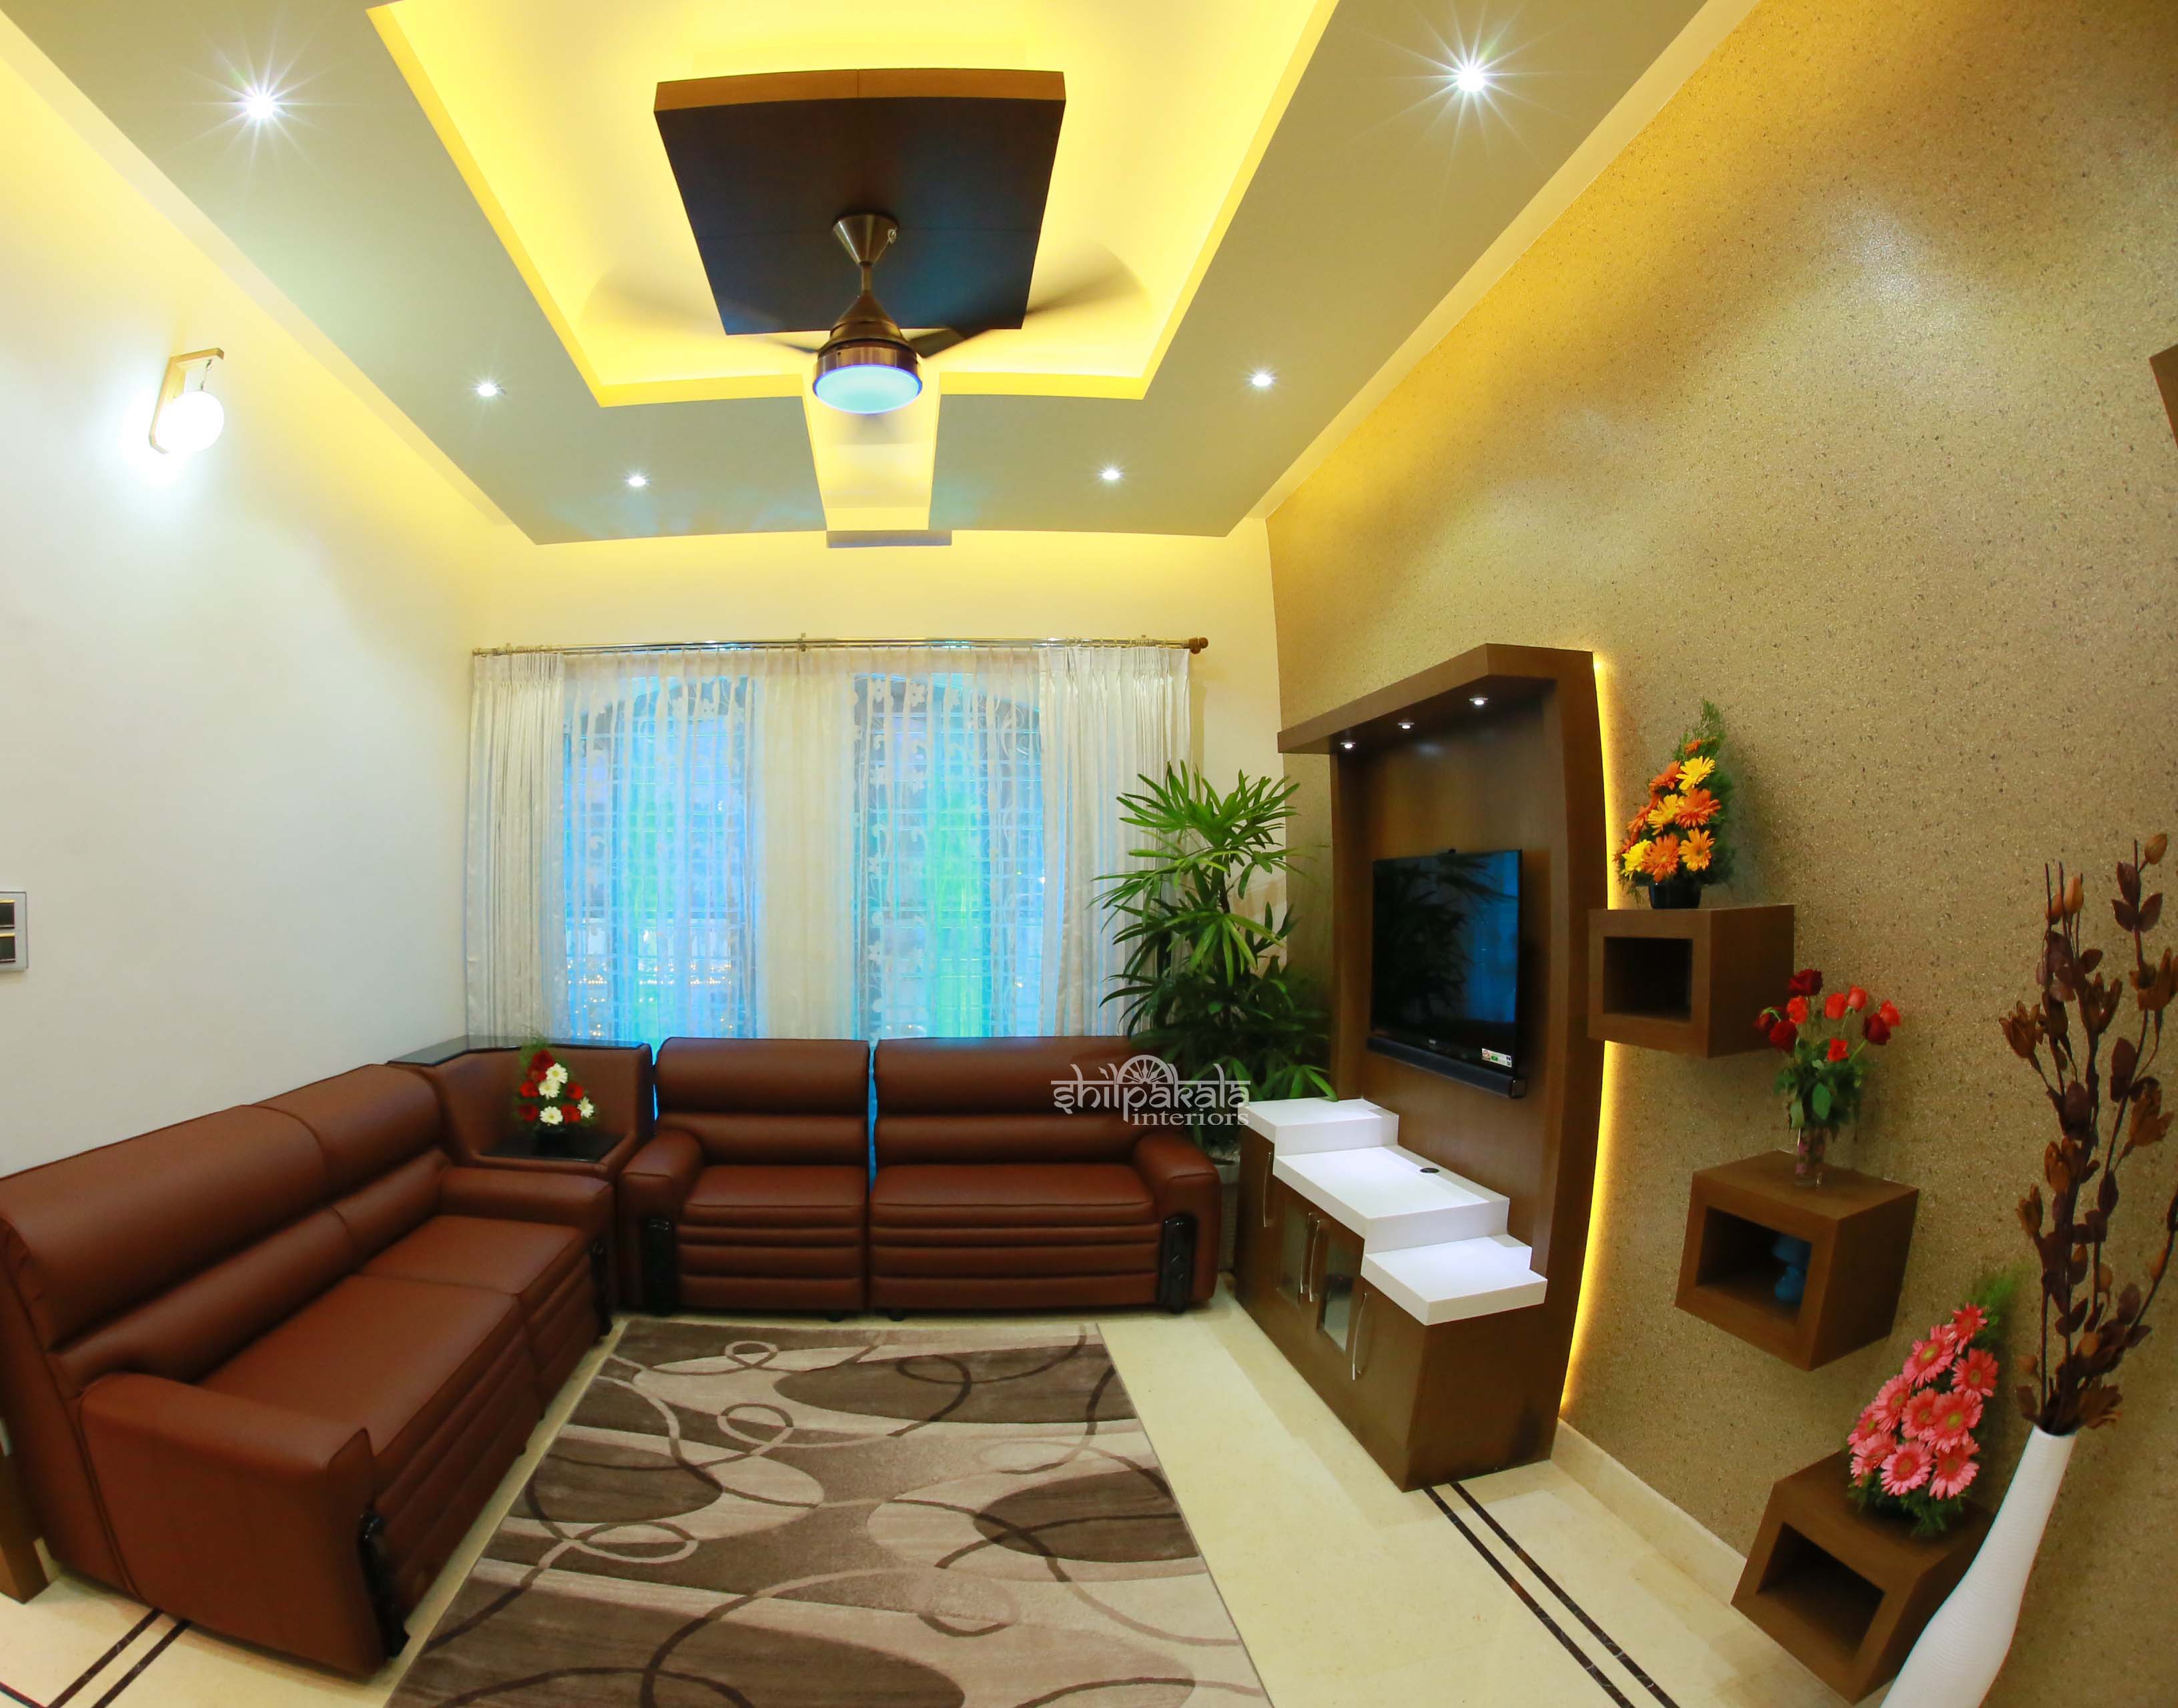 Kerala Living Room Interior Design Pictures / Kerala Style Pooja Room